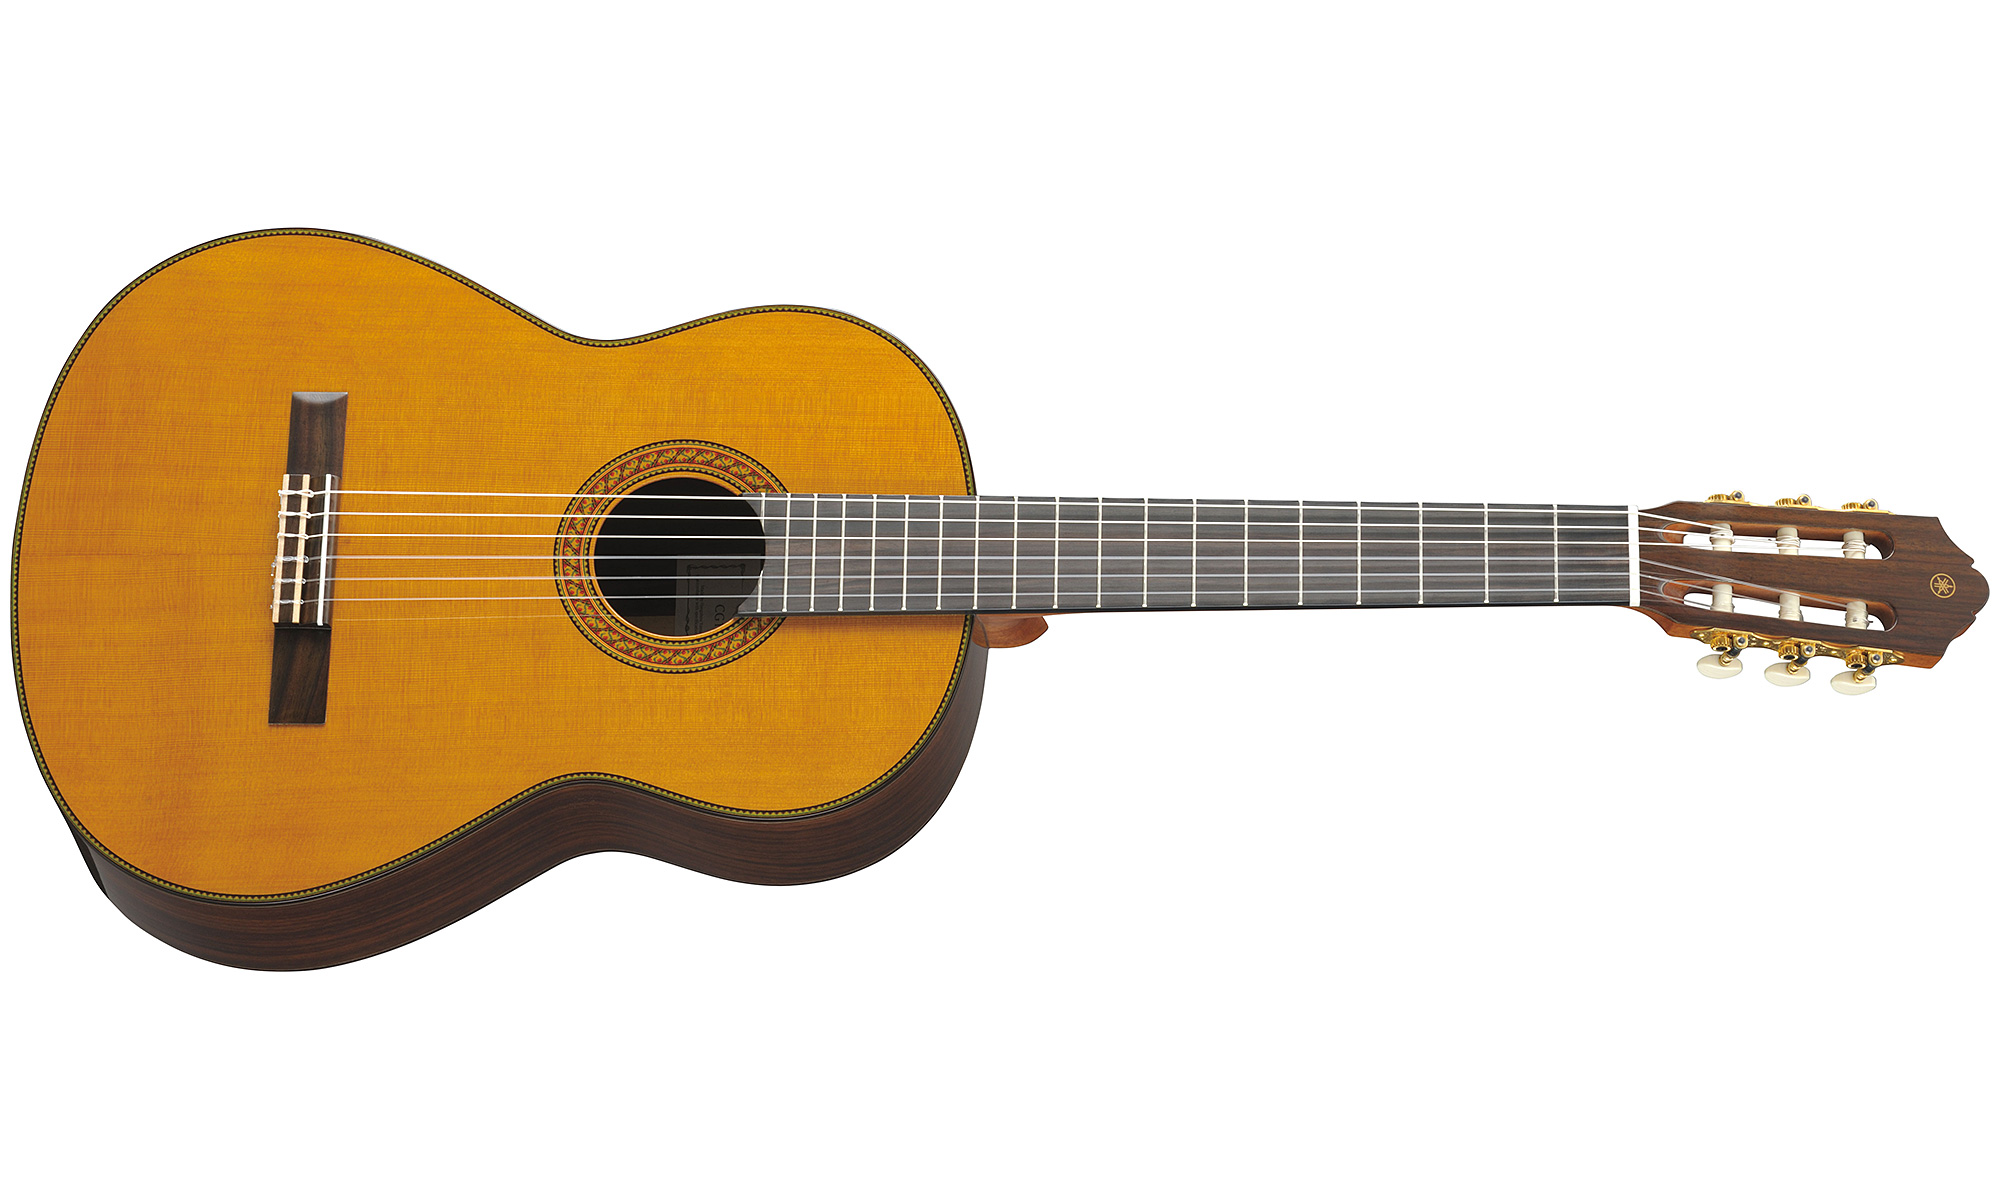 Yamaha Cg192c 4/4 Cedre Palissandre Eb - Natural - Classical guitar 4/4 size - Variation 1